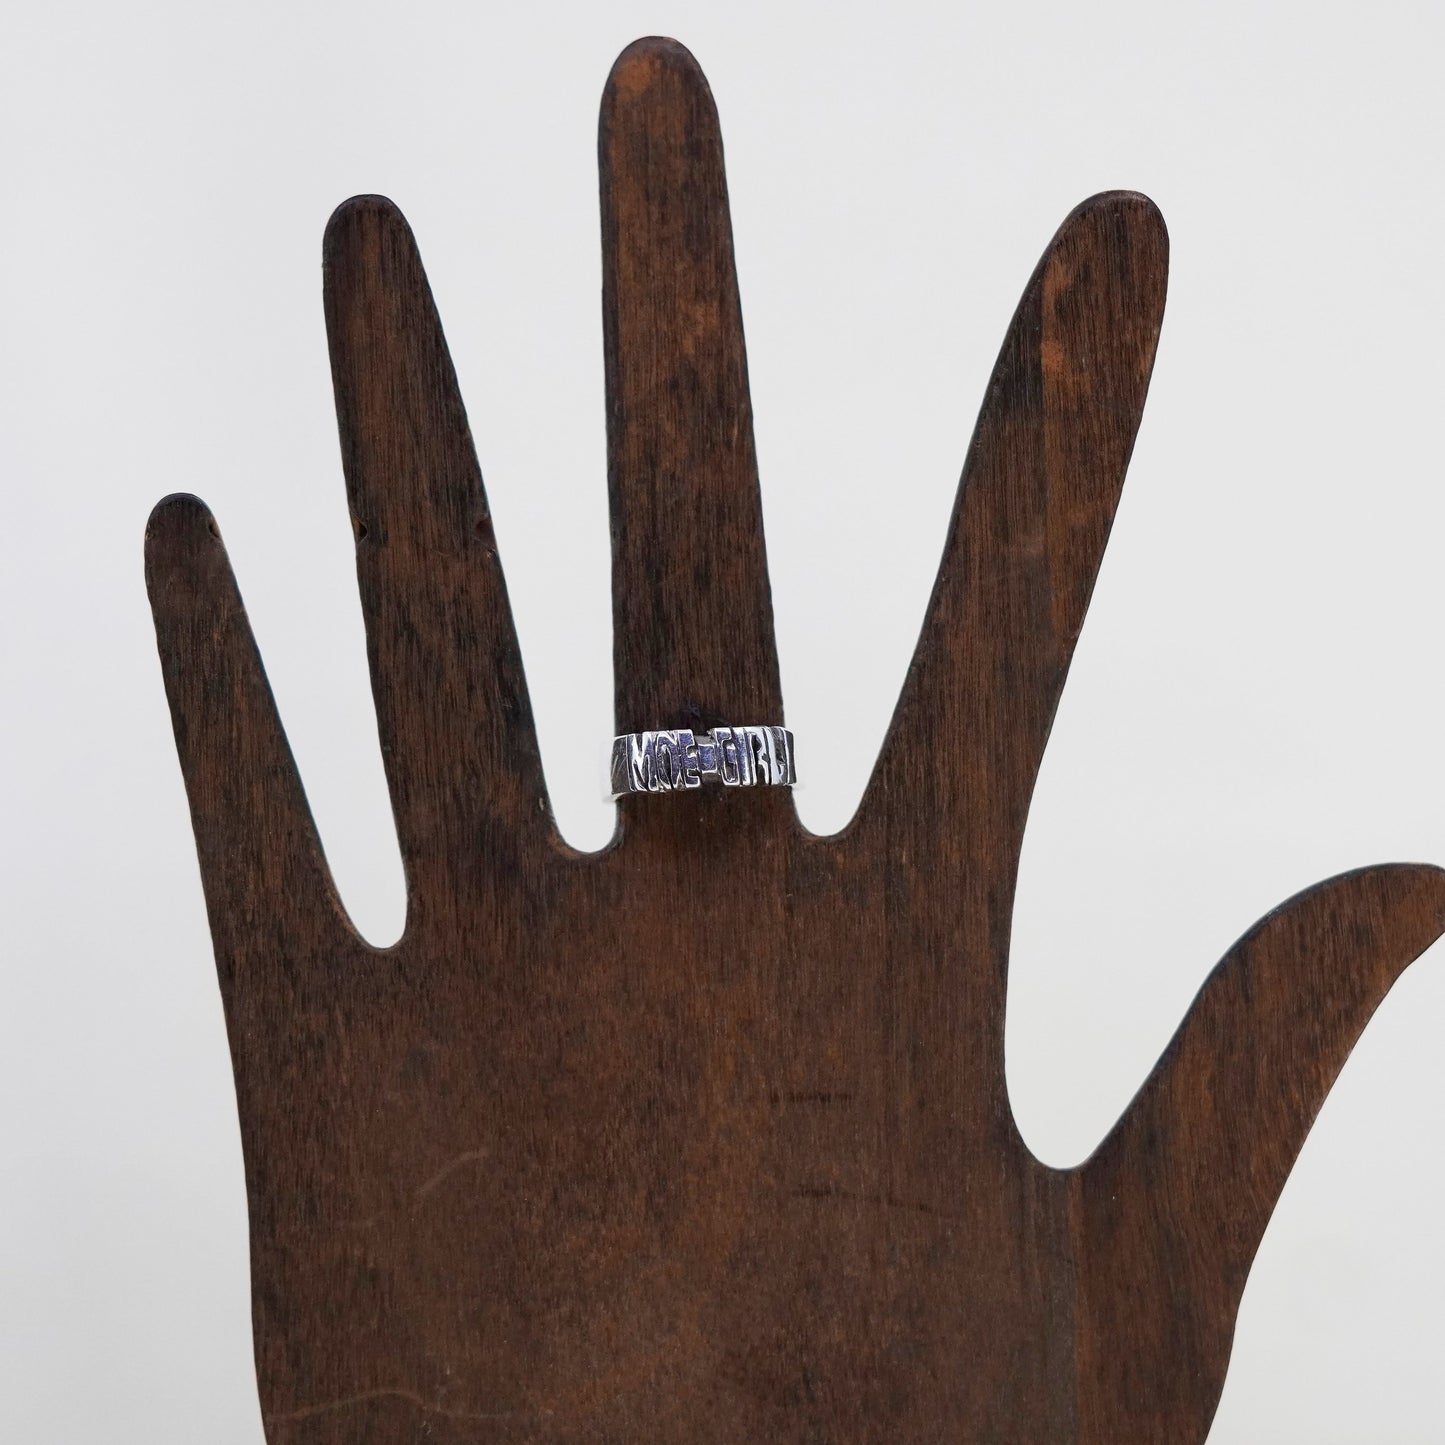 Size 7, vintage sterling silver handmade ring, 925 moe girl band